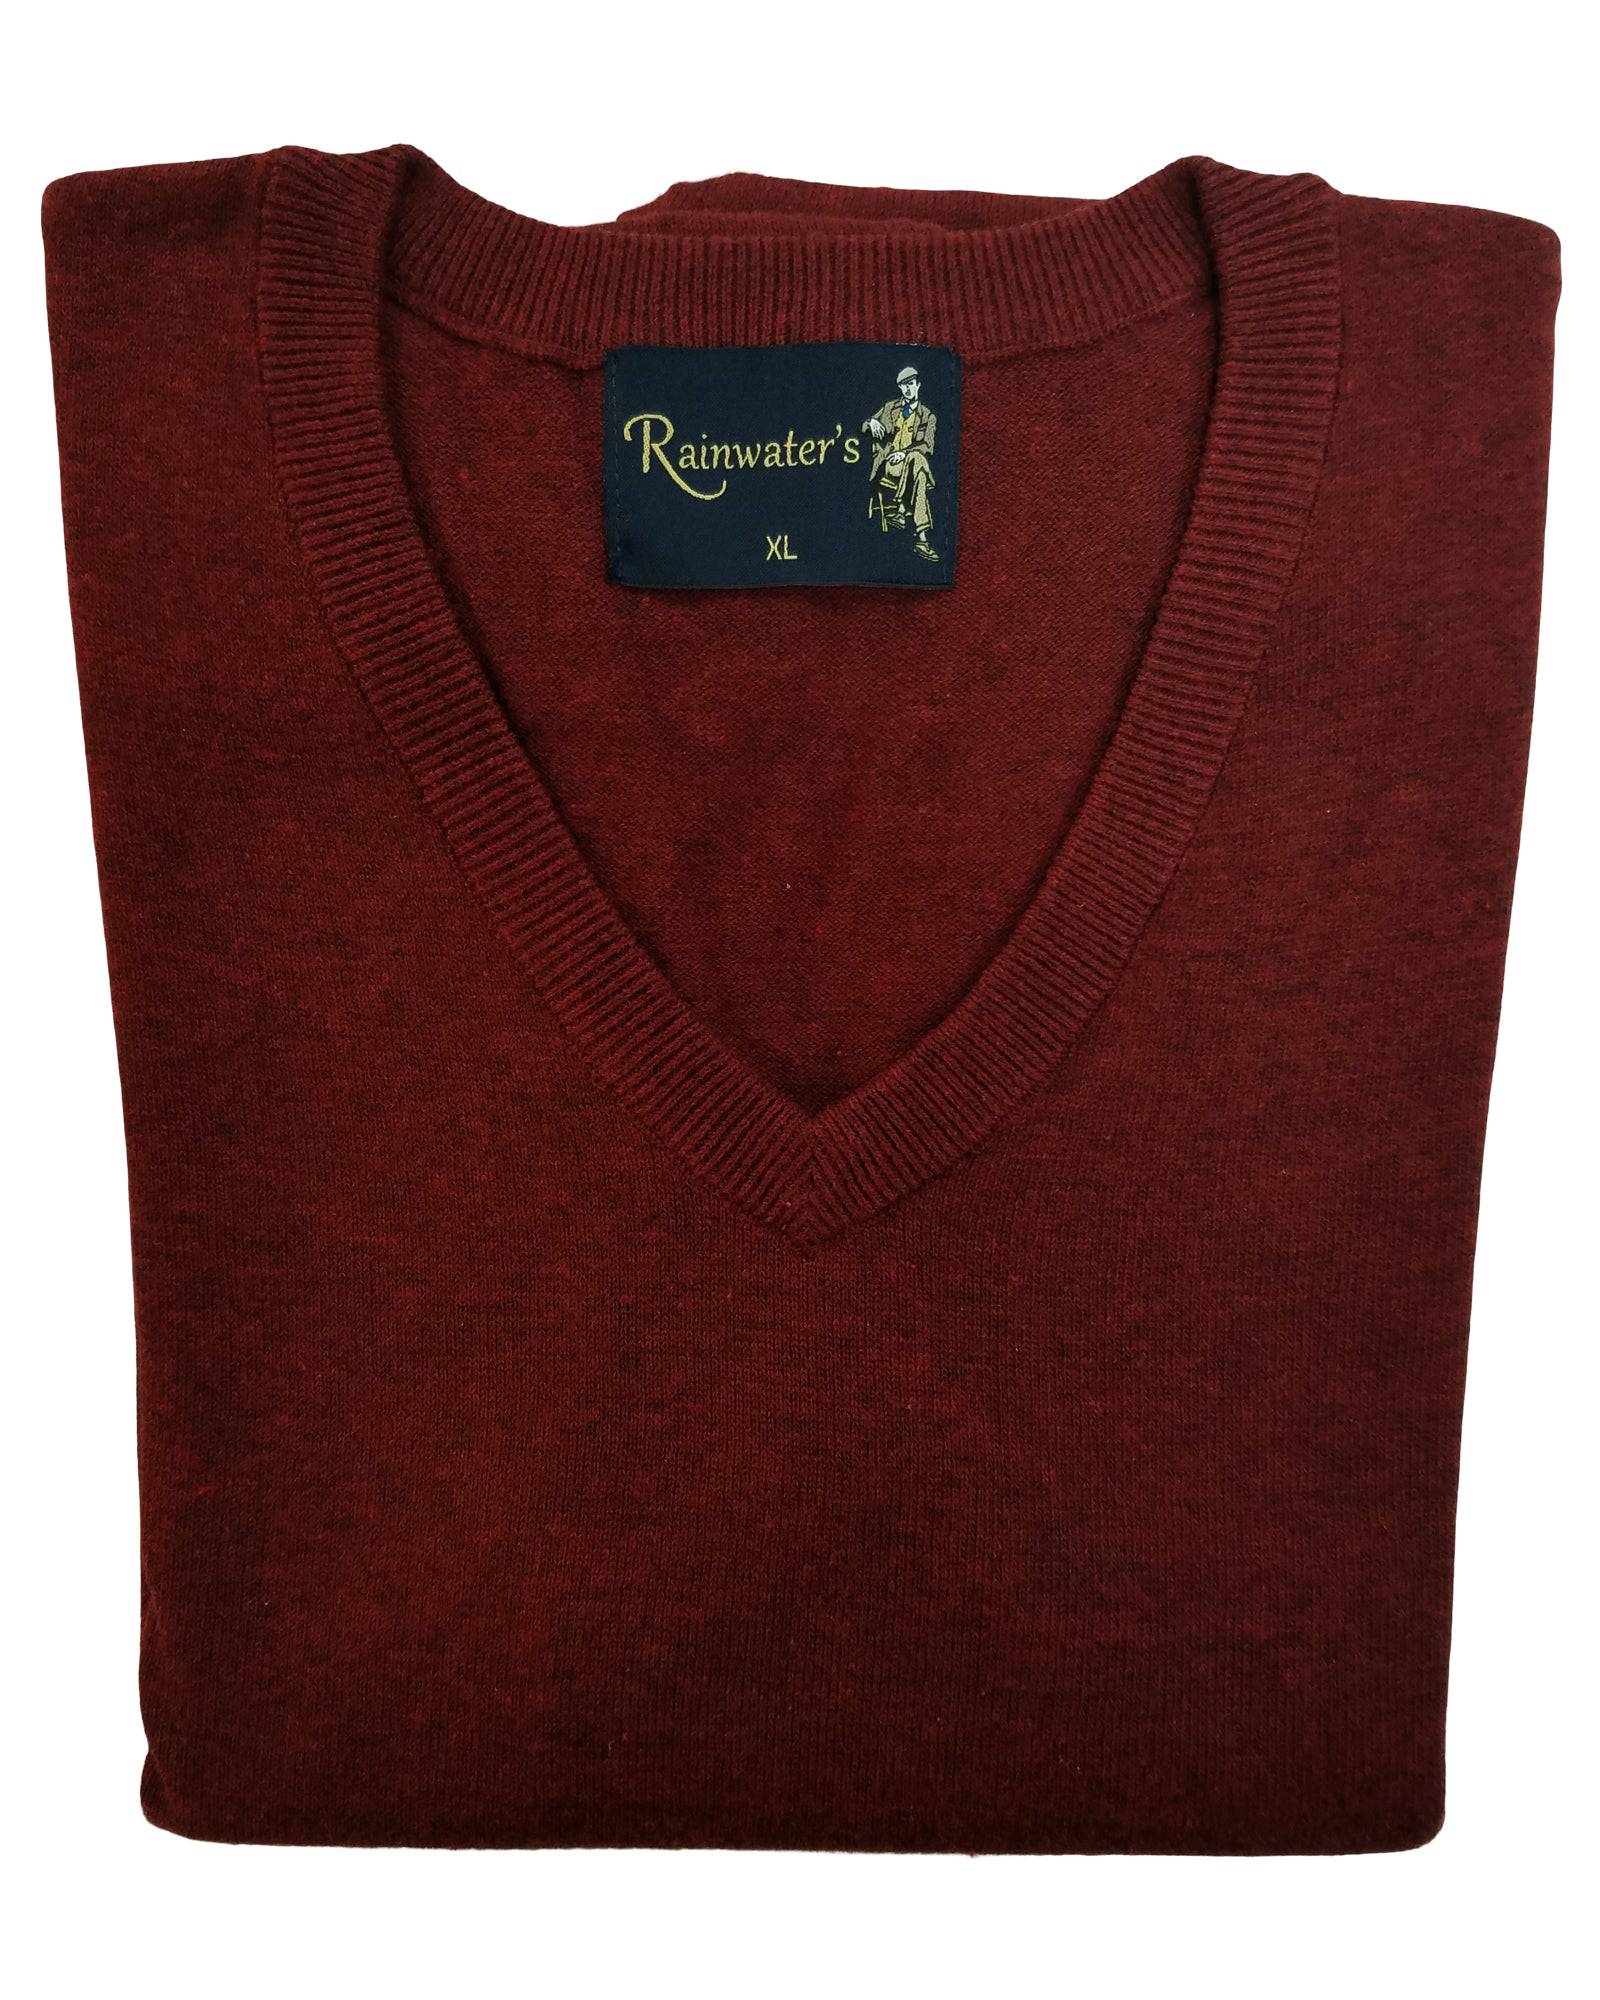 V-Neck Sweater Vest Heather Cotton Blend in Burgundy - Rainwater's Men's Clothing and Tuxedo Rental